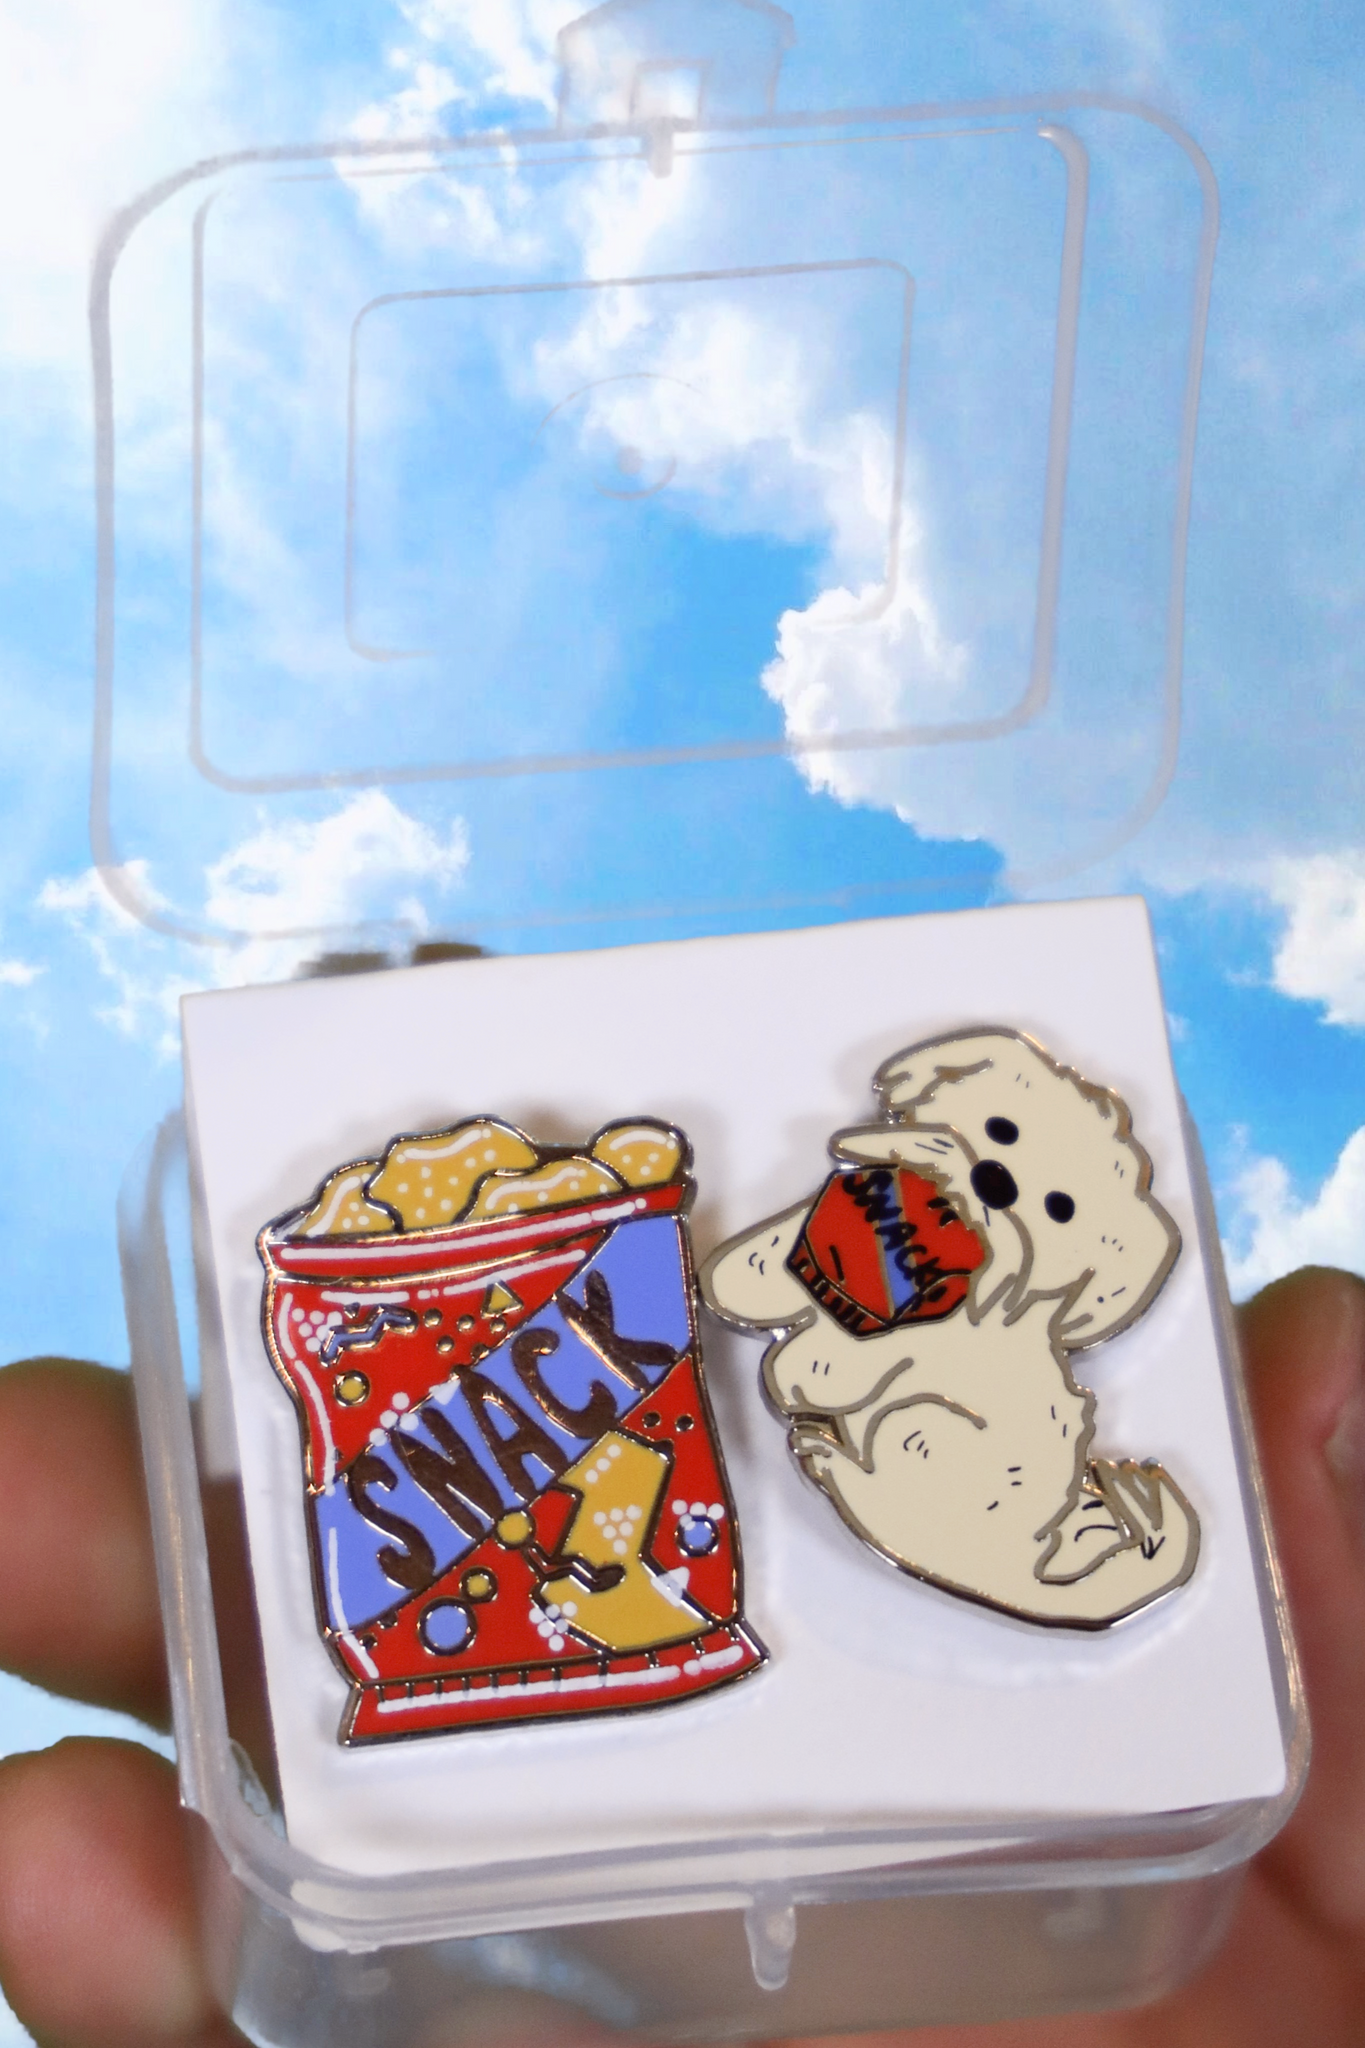 Snack + Fuzz Pin Set